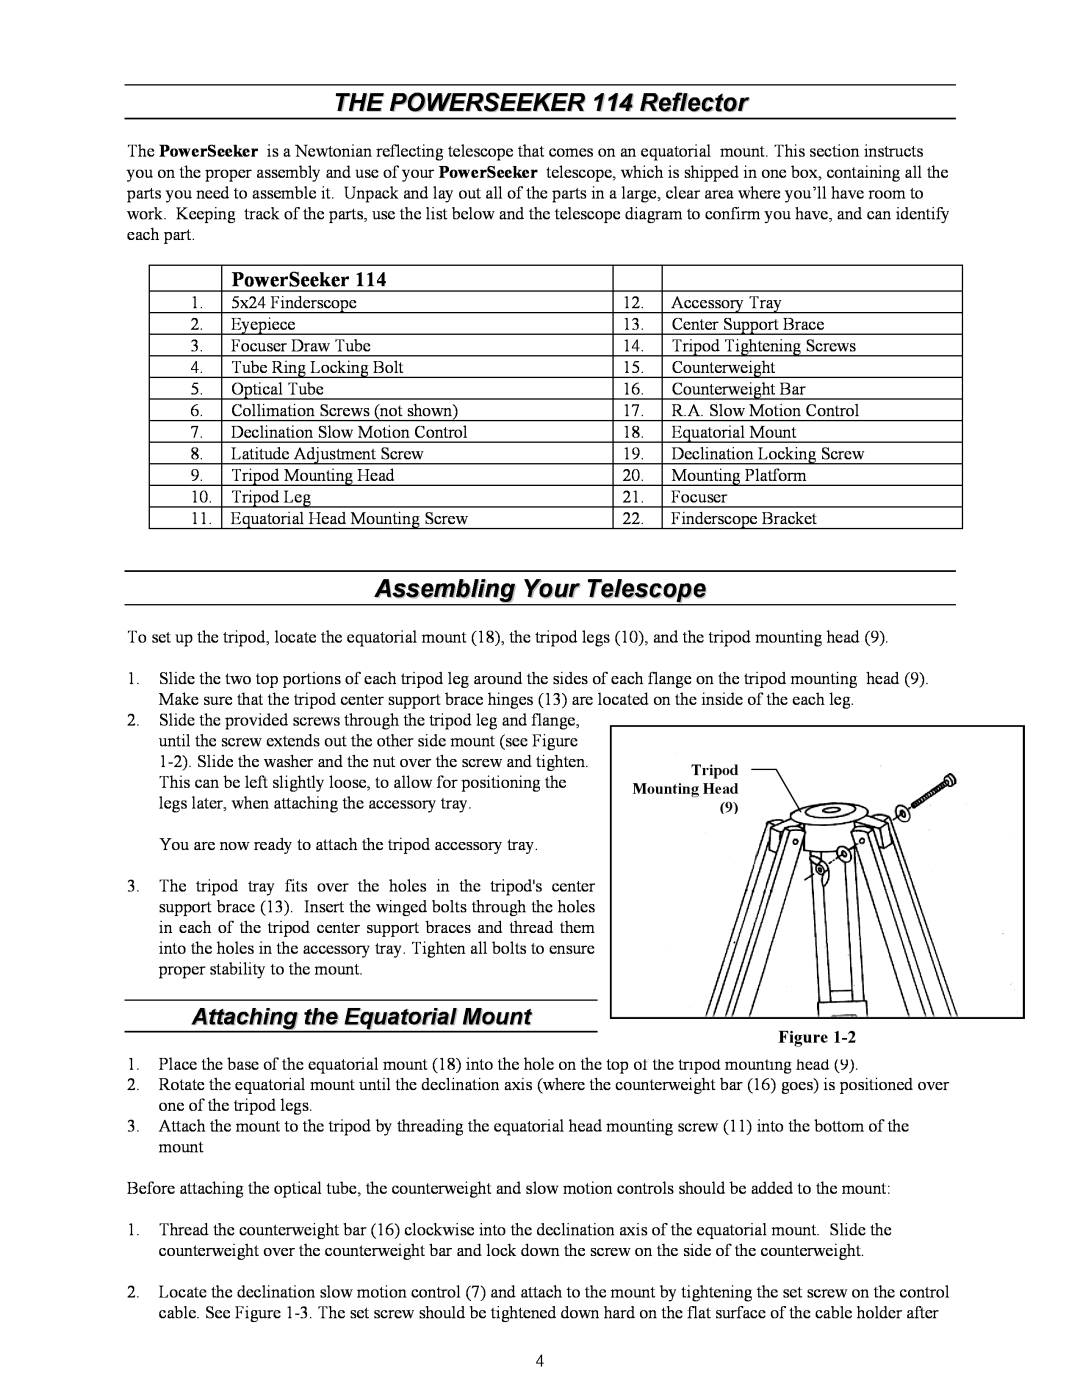 Celestron manual THE POWERSEEKER 114 Reflector, Assembling Your Telescope, PowerSeeker, Attaching the Equatorial Mount 